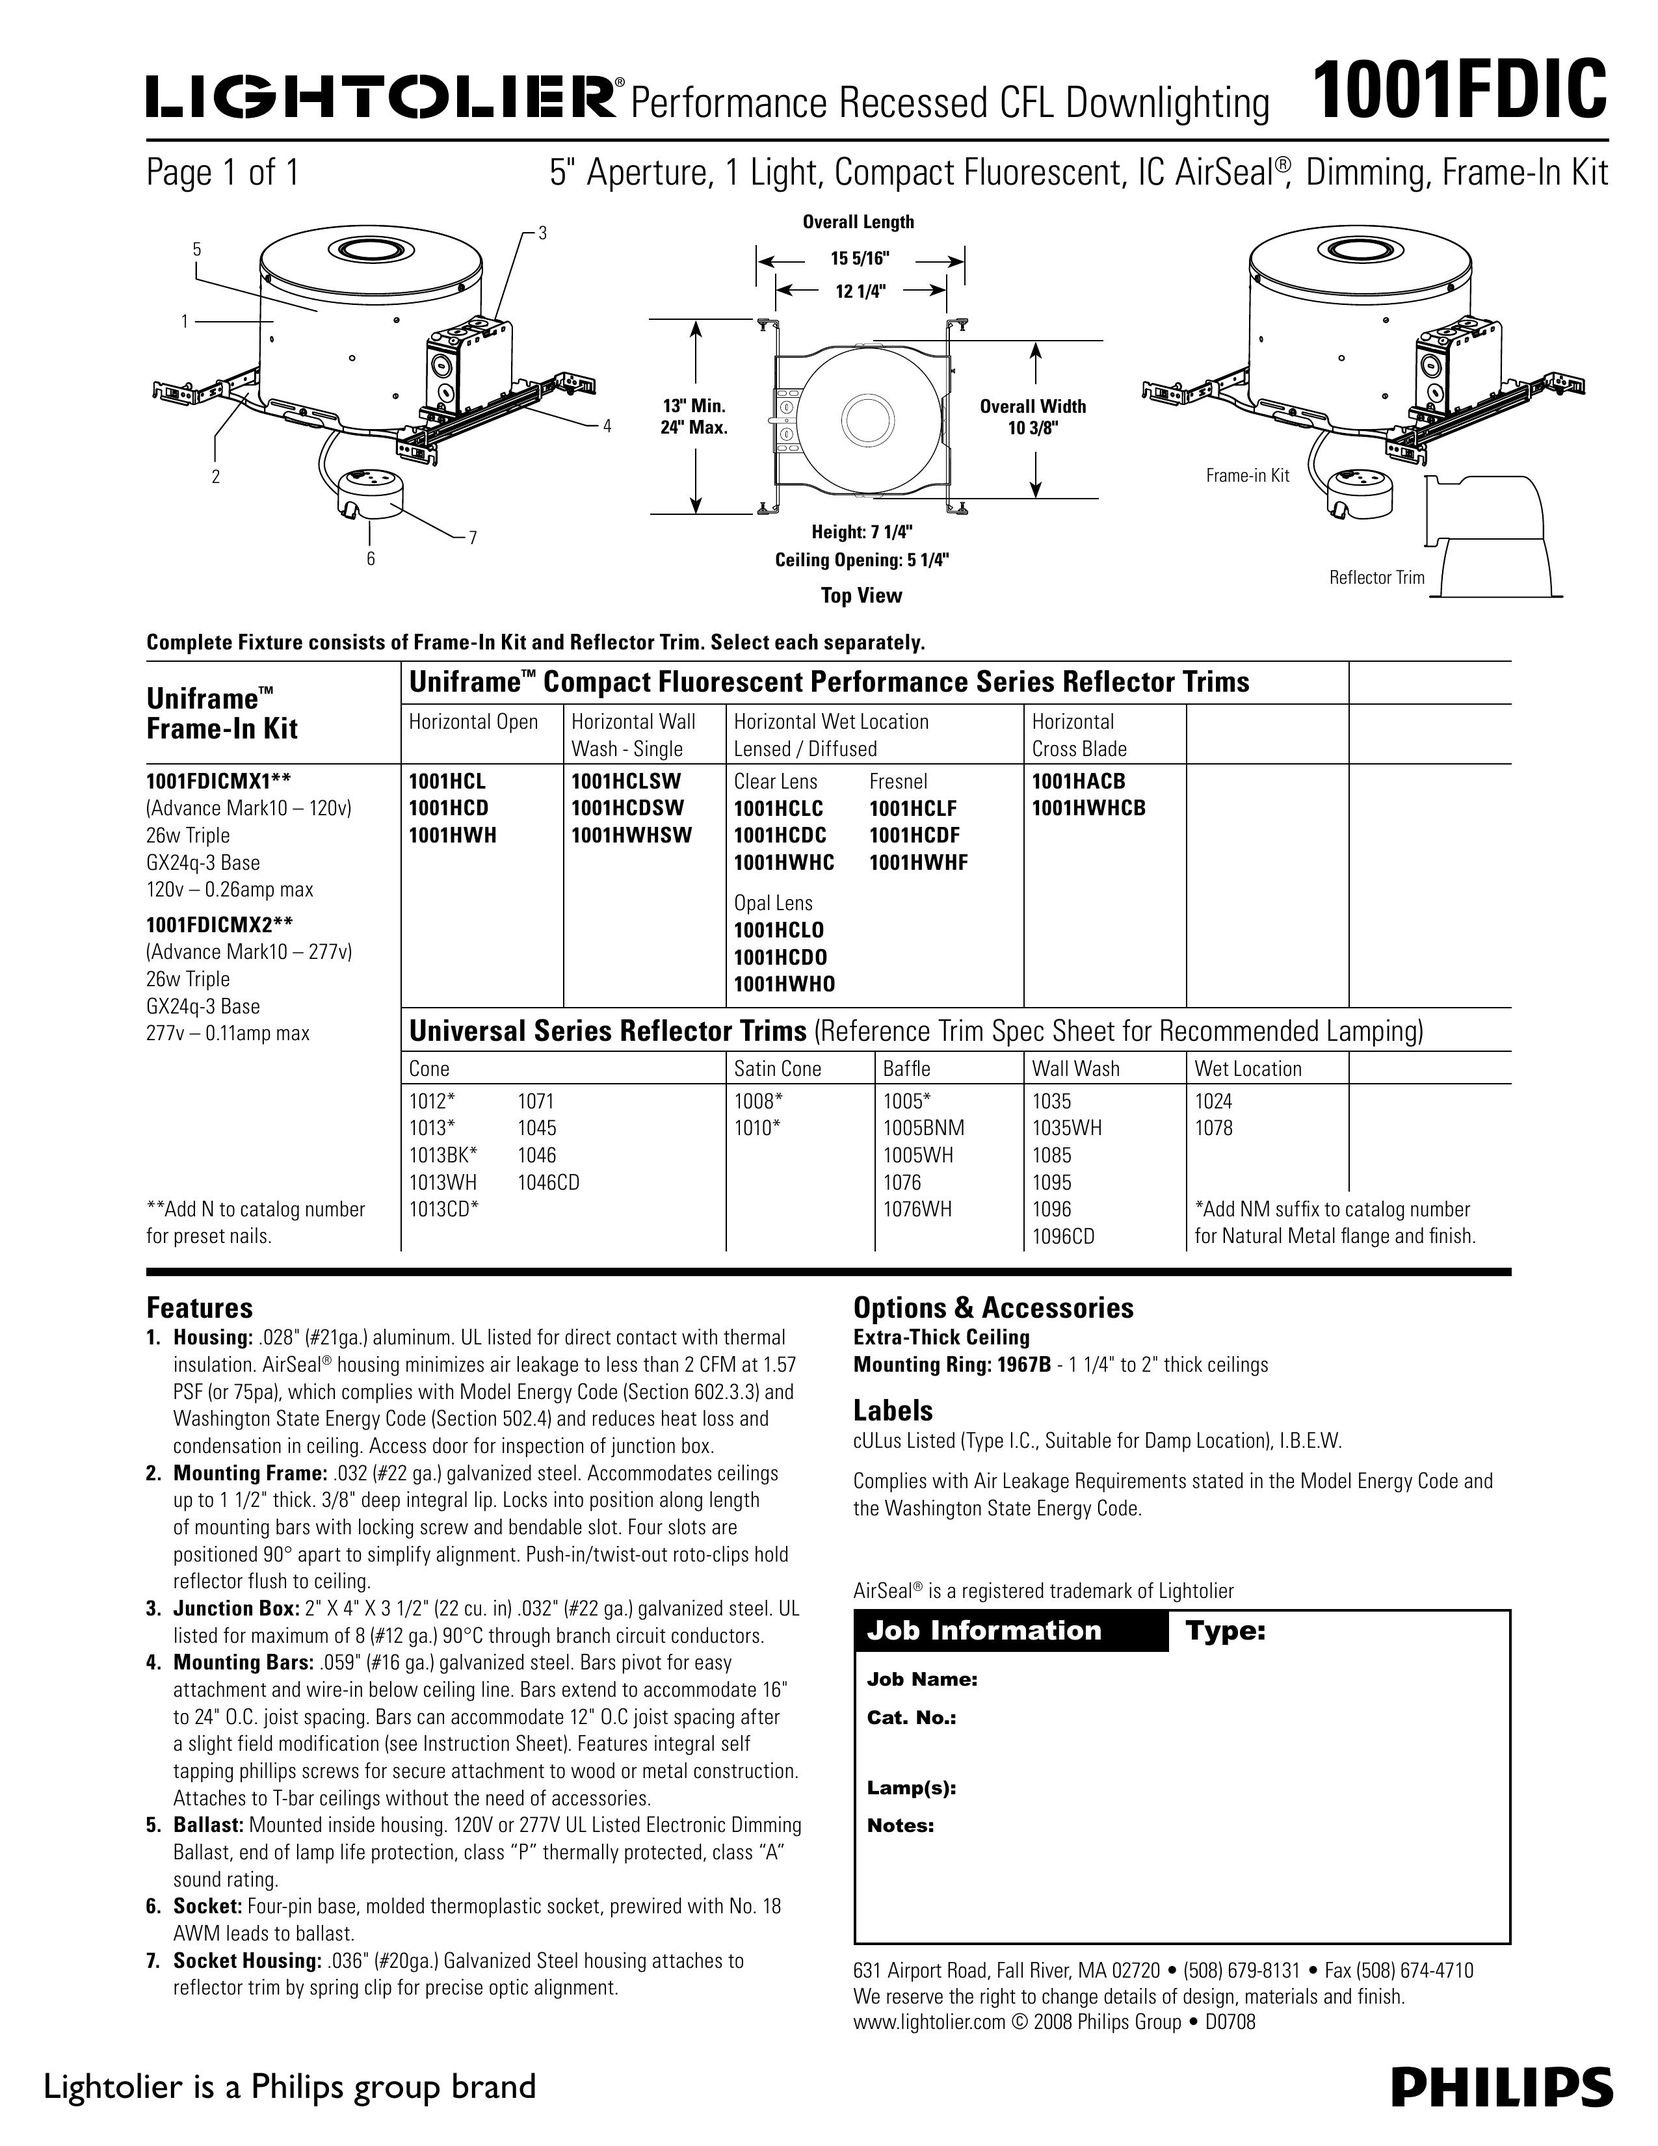 Lightolier 1001FDIC Indoor Furnishings User Manual